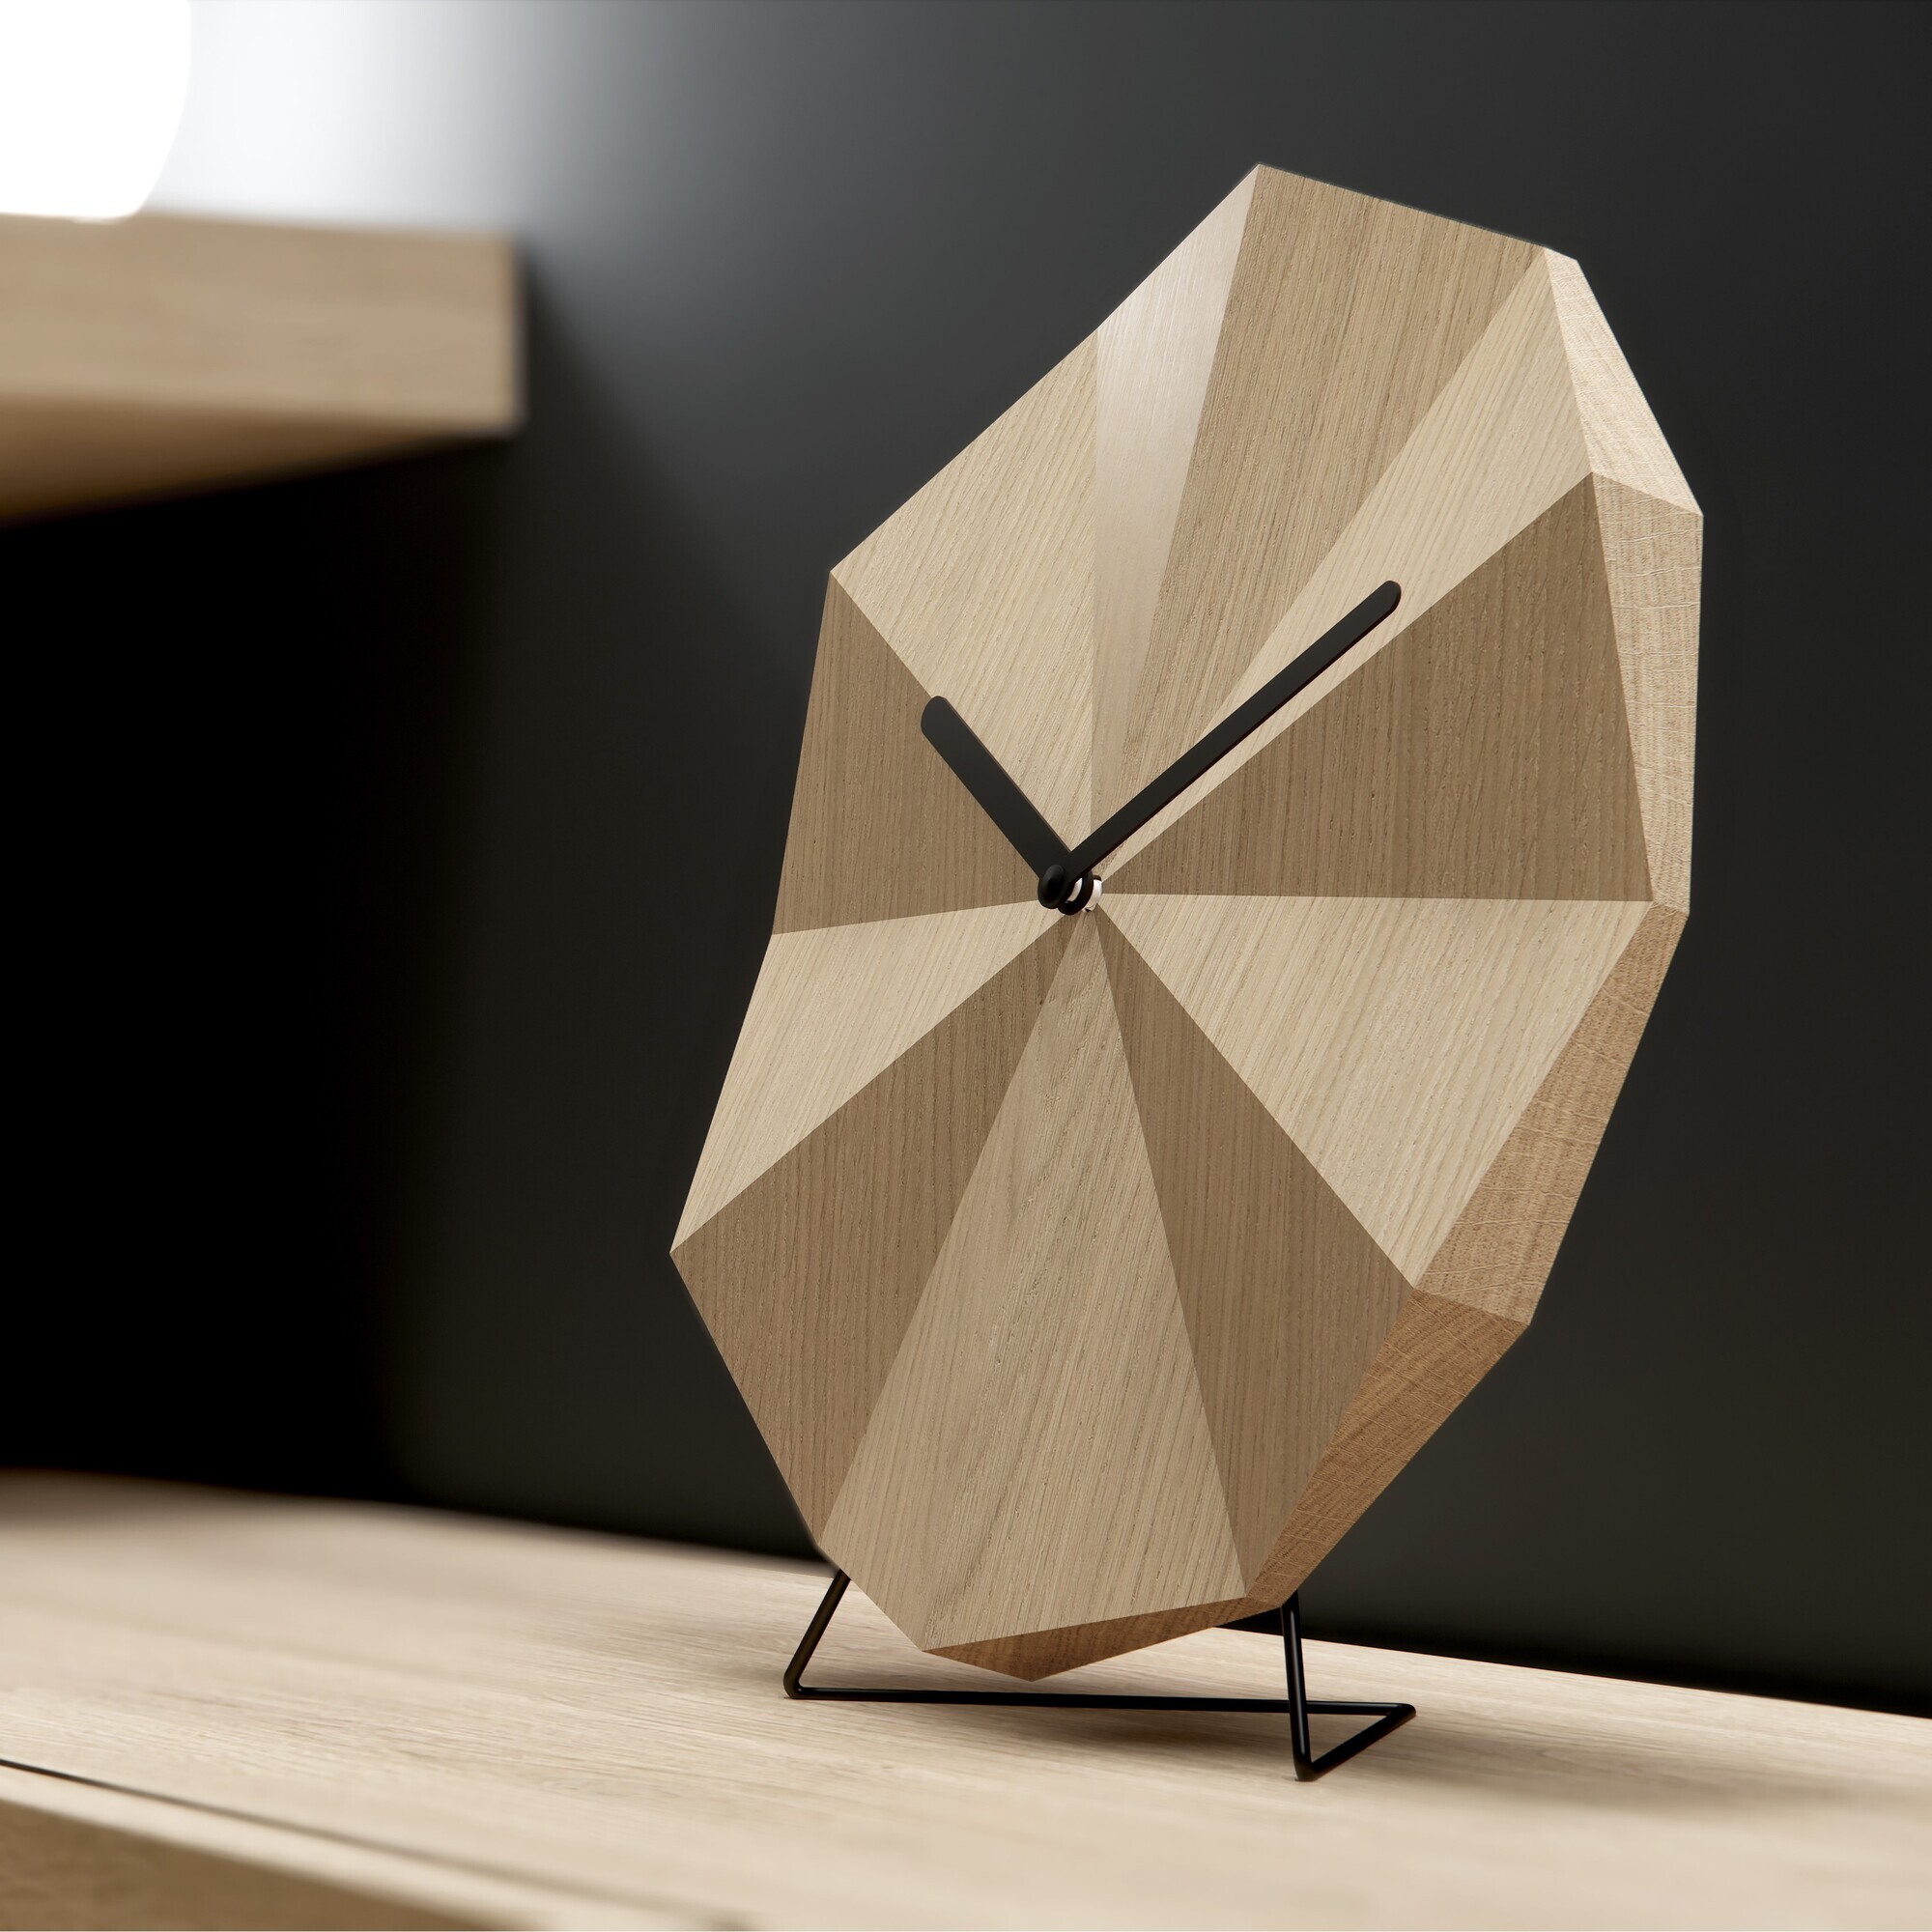 https://www.holzdesignpur.de/media/image/7a/2c/88/Designer-Tischuhr-aus-Holz-Delta-Clock-Lawa-Design.jpg